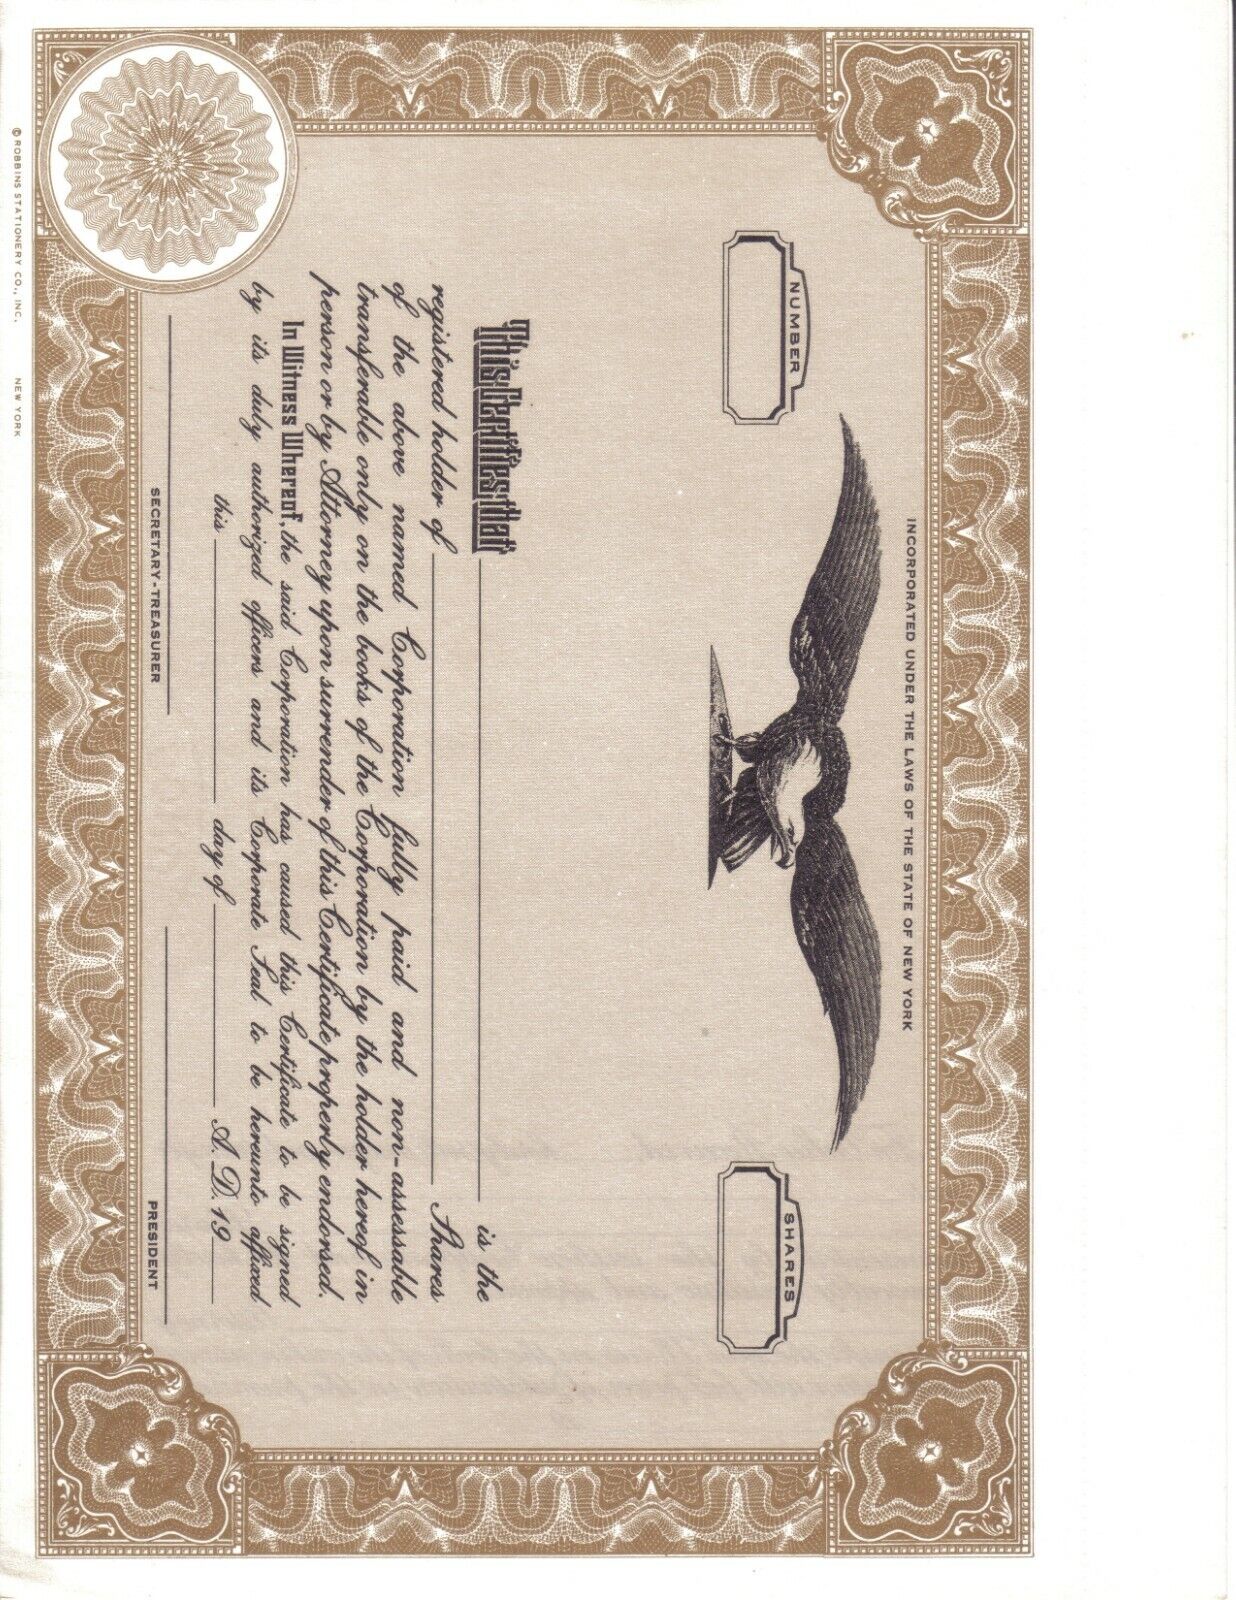 15 Blank Stock Certificates Engraved Cotton Content Без бренда - фотография #4